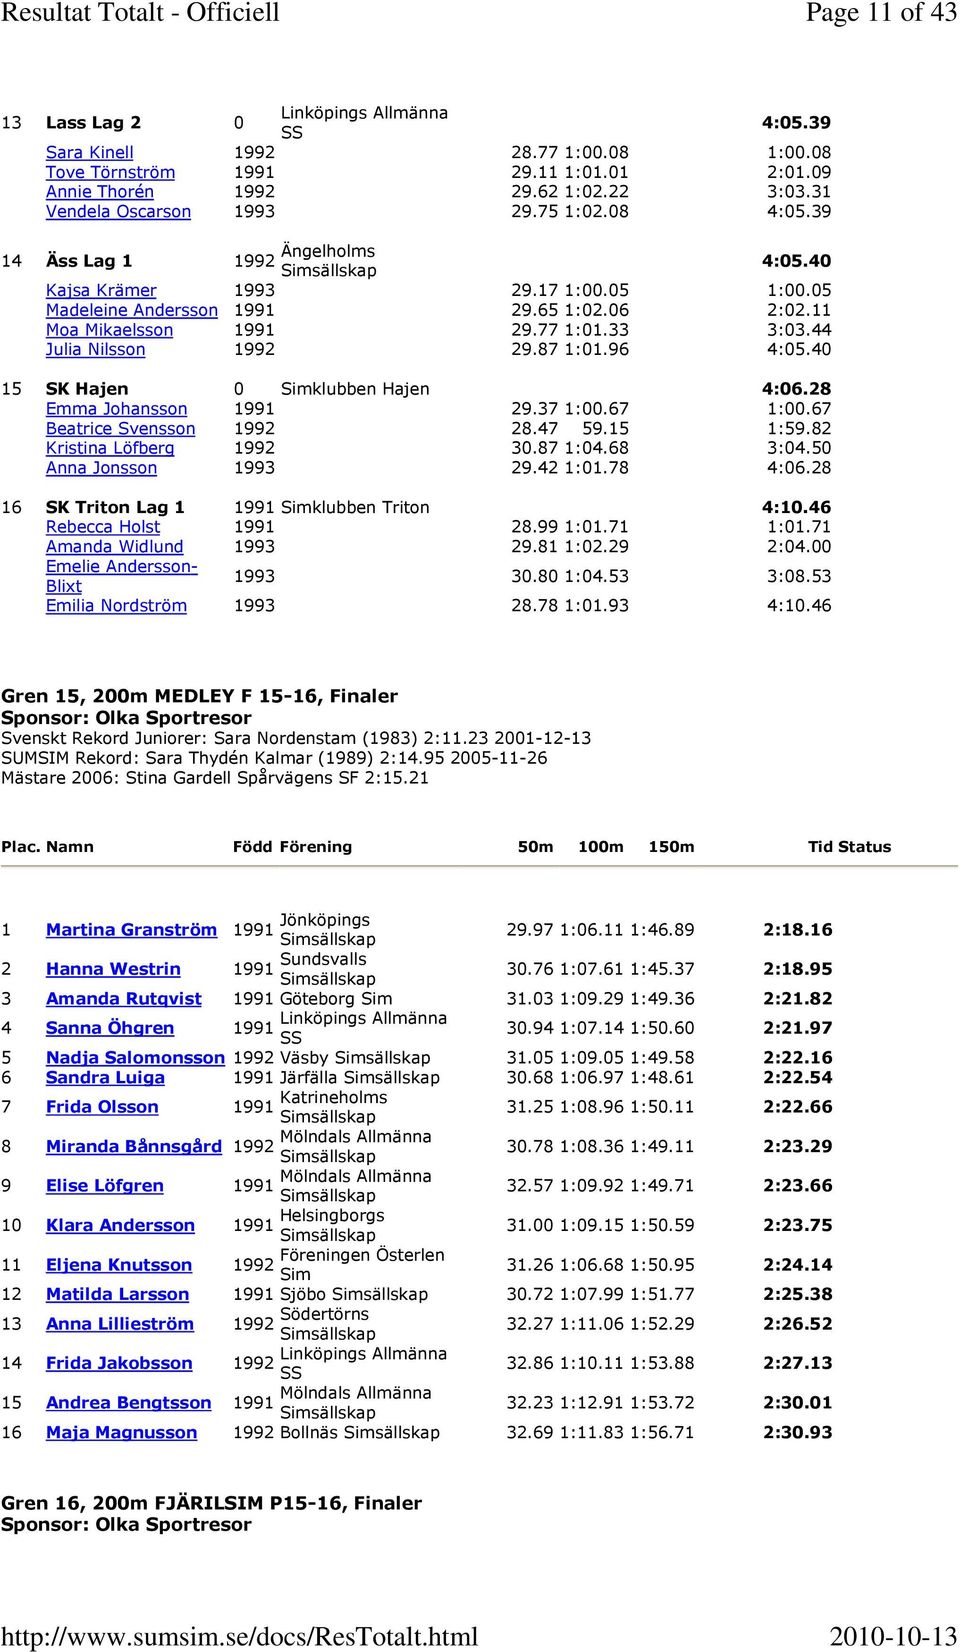 40 15 SK Hajen 0 Simklubben Hajen 4:06.28 Emma Johansson 29.37 1:00.67 1:00.67 Beatrice Svensson 28.47 59.15 1:59.82 Kristina Löfberg 30.87 1:04.68 3:04.50 Anna Jonsson 1993 29.42 1:01.78 4:06.